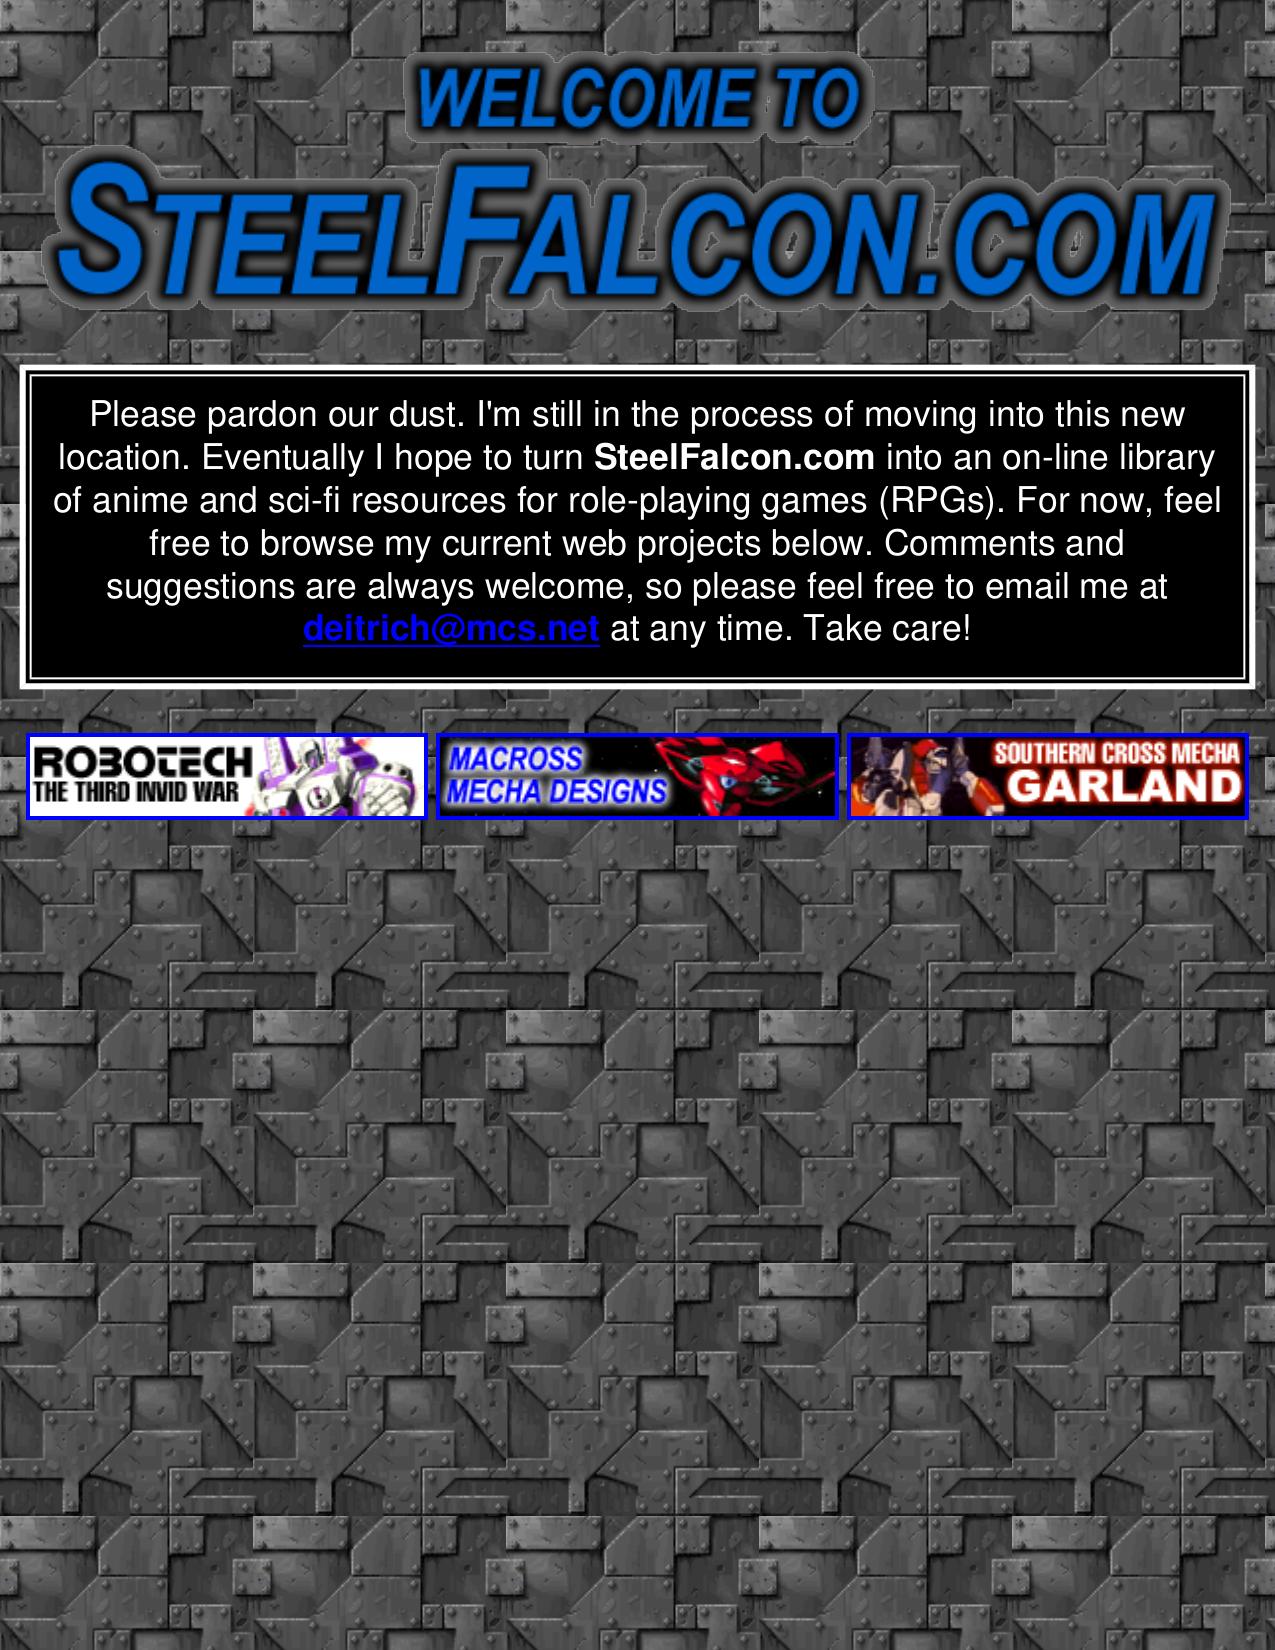 Welcome to SteelFalcon.com!